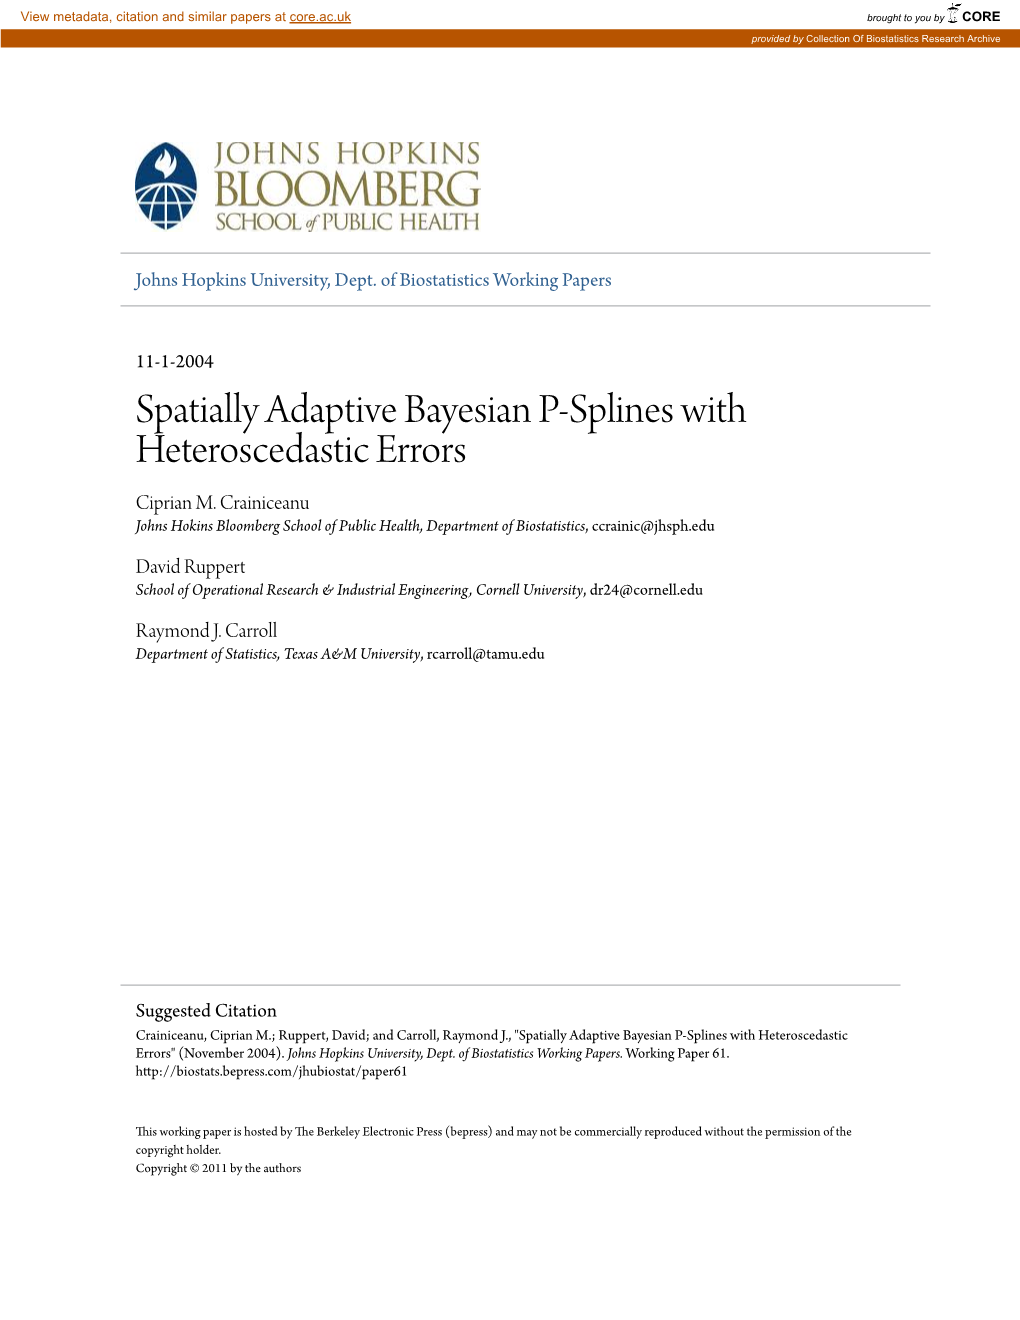 Spatially Adaptive Bayesian P-Splines with Heteroscedastic Errors Ciprian M